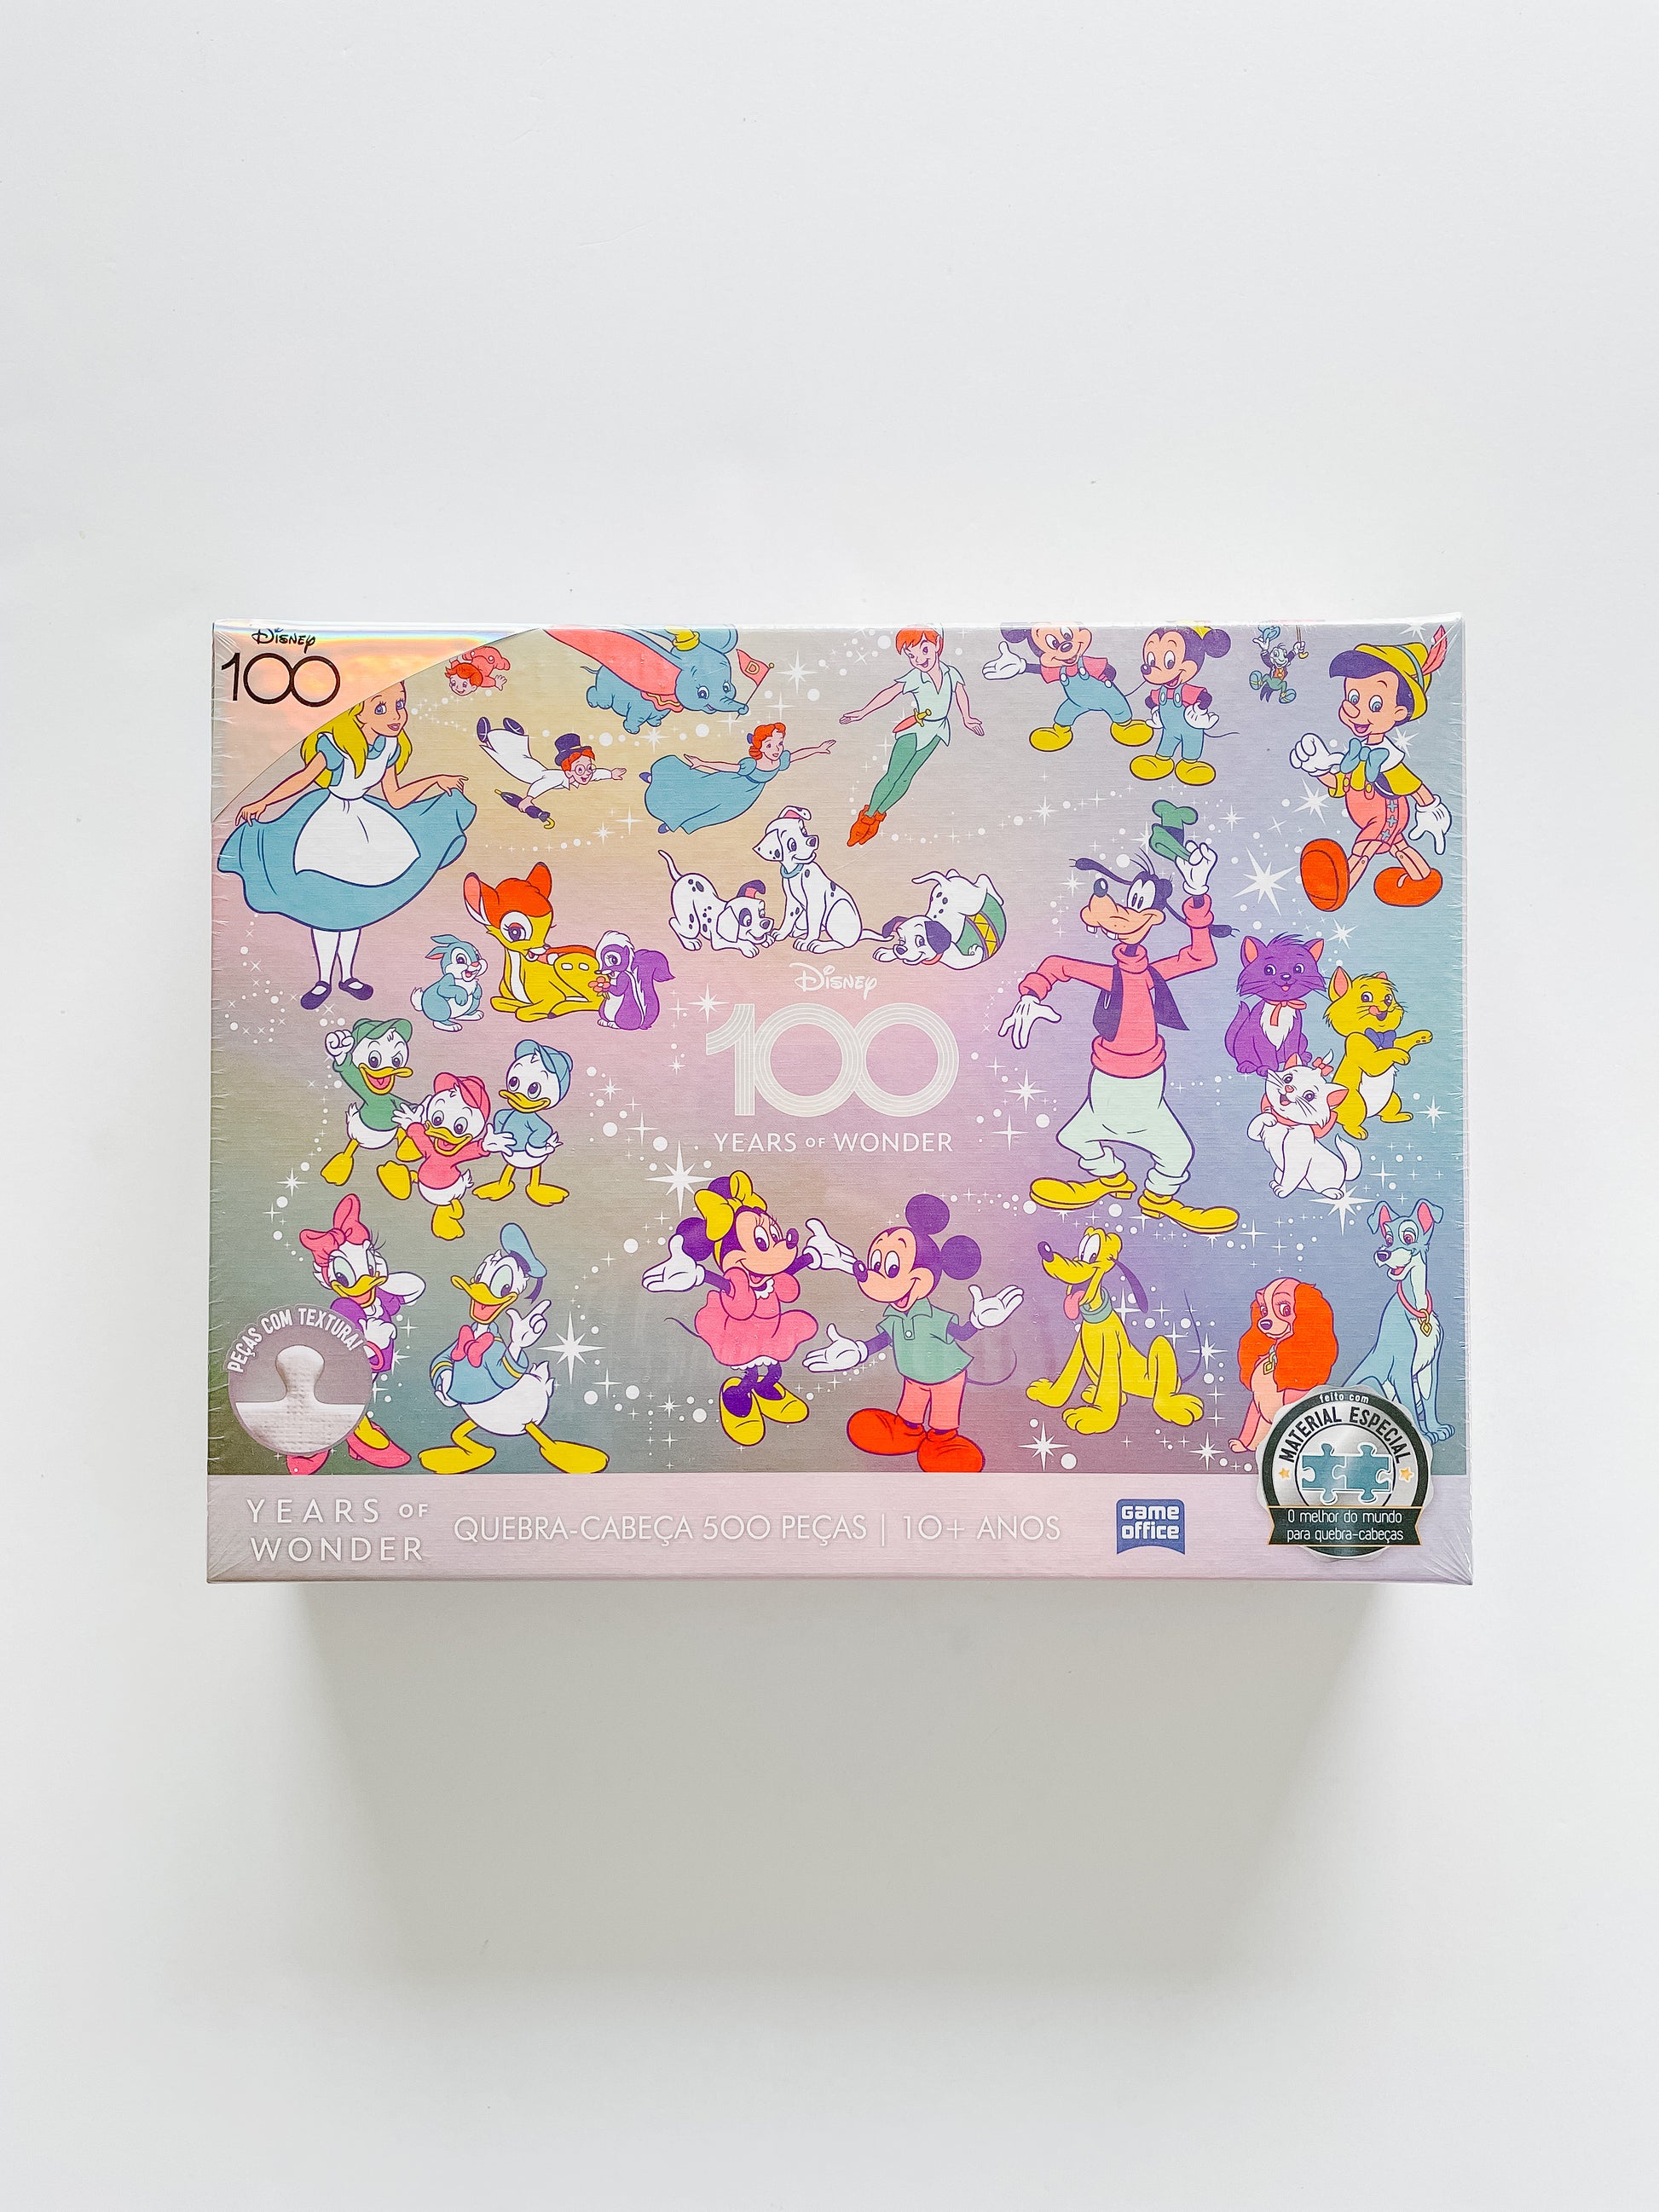 Puzzles - Disney 100 500pc